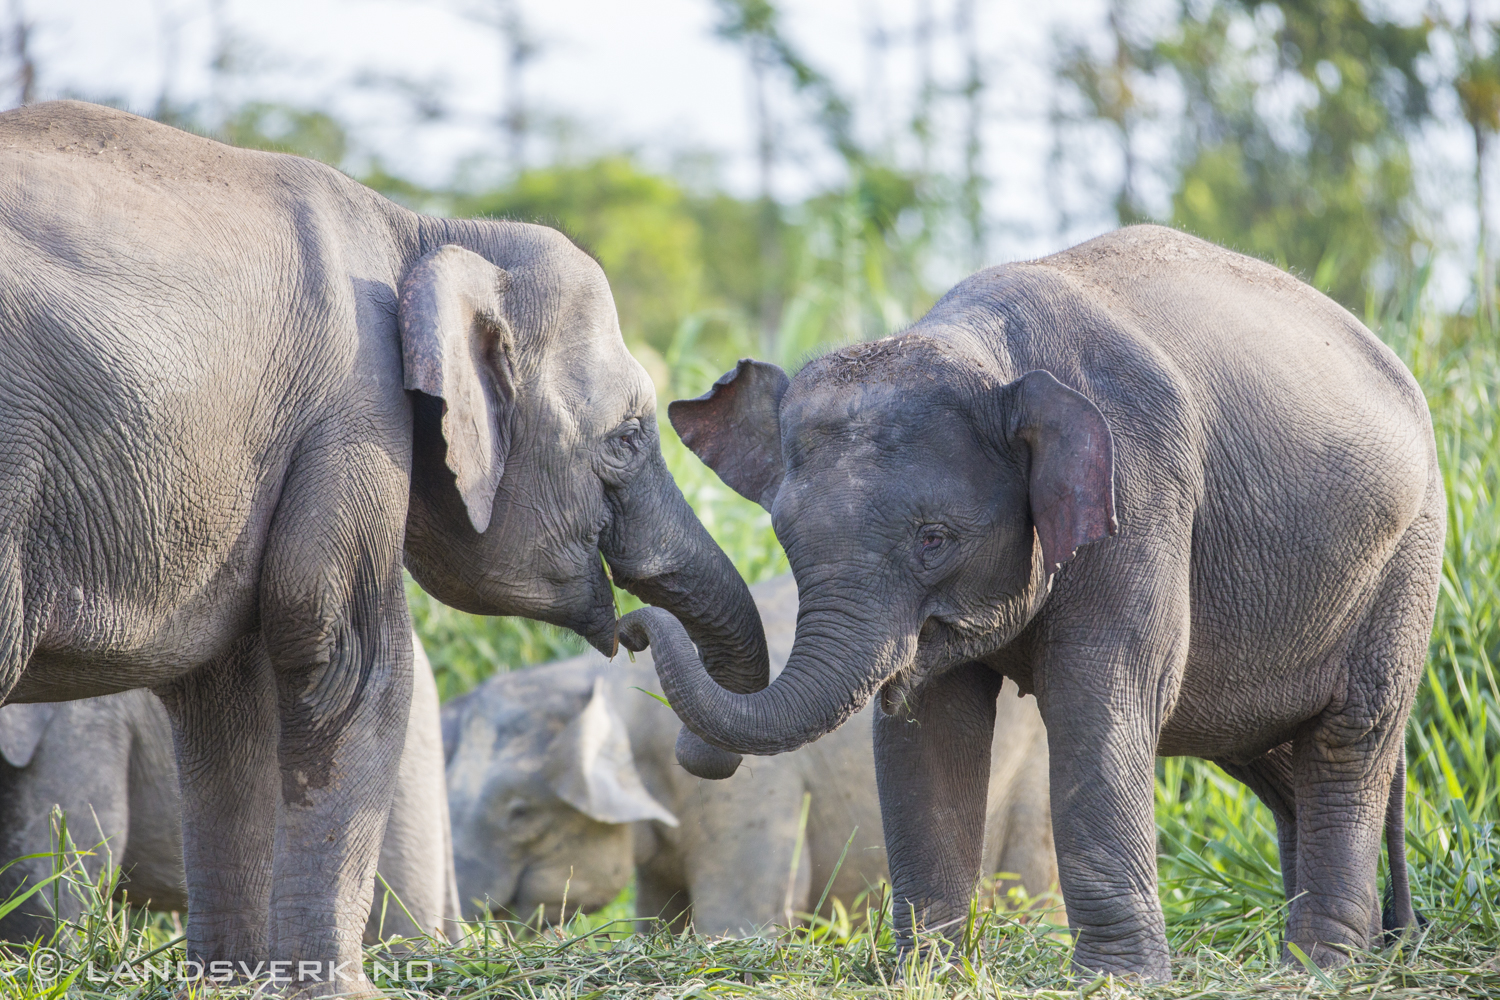 Wild Borneo pygmy elephants feeding each other. Sukau, Borneo.

(Canon EOS 5D Mark III / Canon EF 70-200mm f/2.8 L IS II USM / Canon 2x EF Extender III)